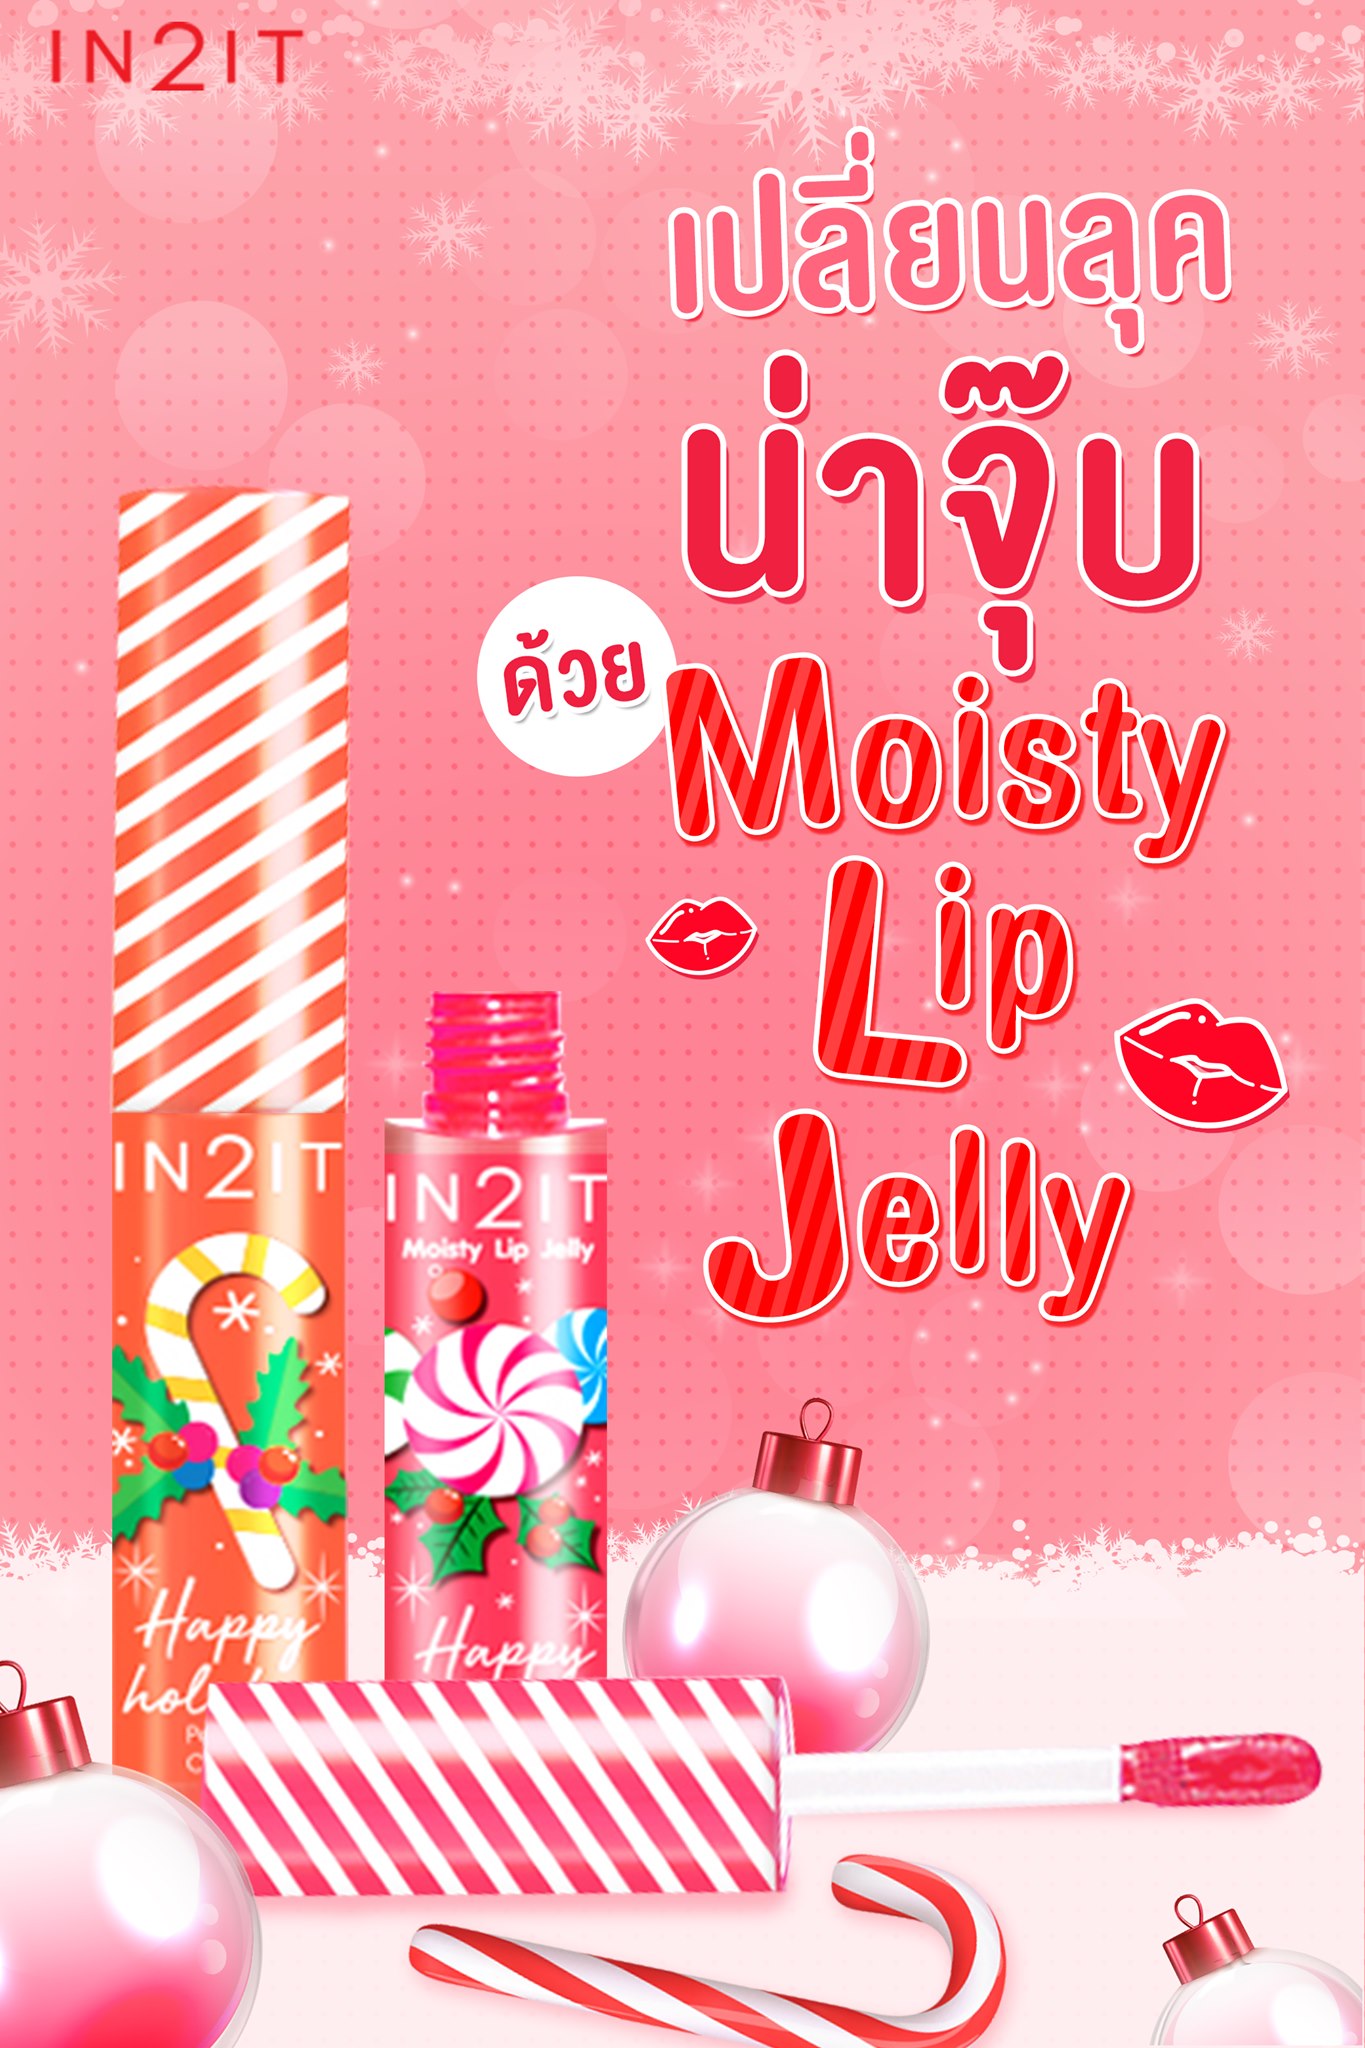 IN2IT, IN2IT Moisty Lip Jelly, IN2IT Moisty Lip Jelly รีวิว, IN2IT Moisty Lip Jelly 5g, IN2IT Moisty Lip Jelly #01 Peachy Candy, IN2IT Moisty Lip Jelly #02 Crystal Strawberry, ลิปกลอส, ลิปกลอสเนื้อเจลลี่, ลิปกลอส IN2IT